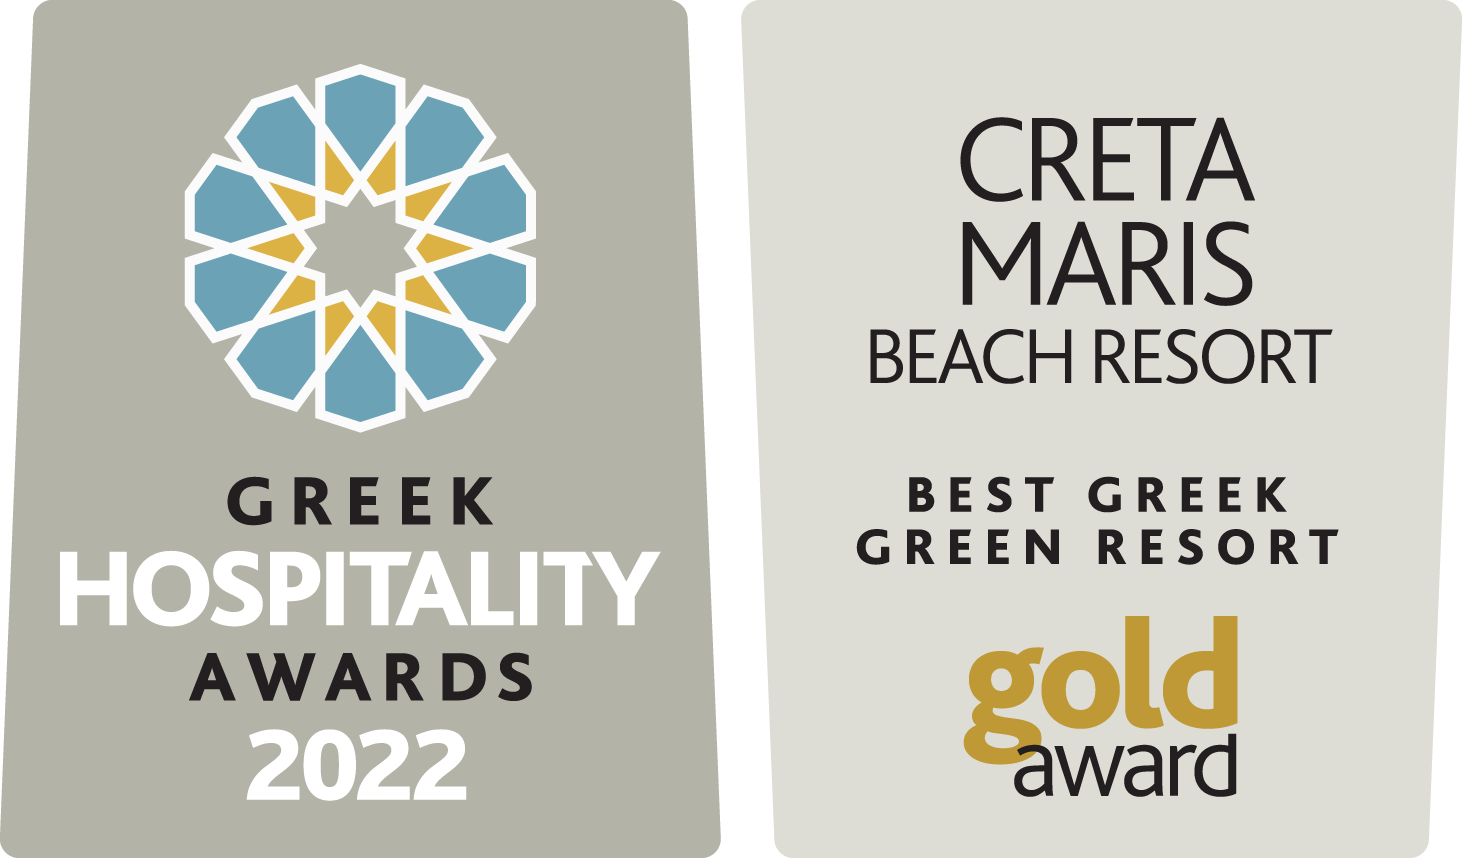 Greek Hospitality Awards 2022 - Best Greek Green Resort - Gold Award